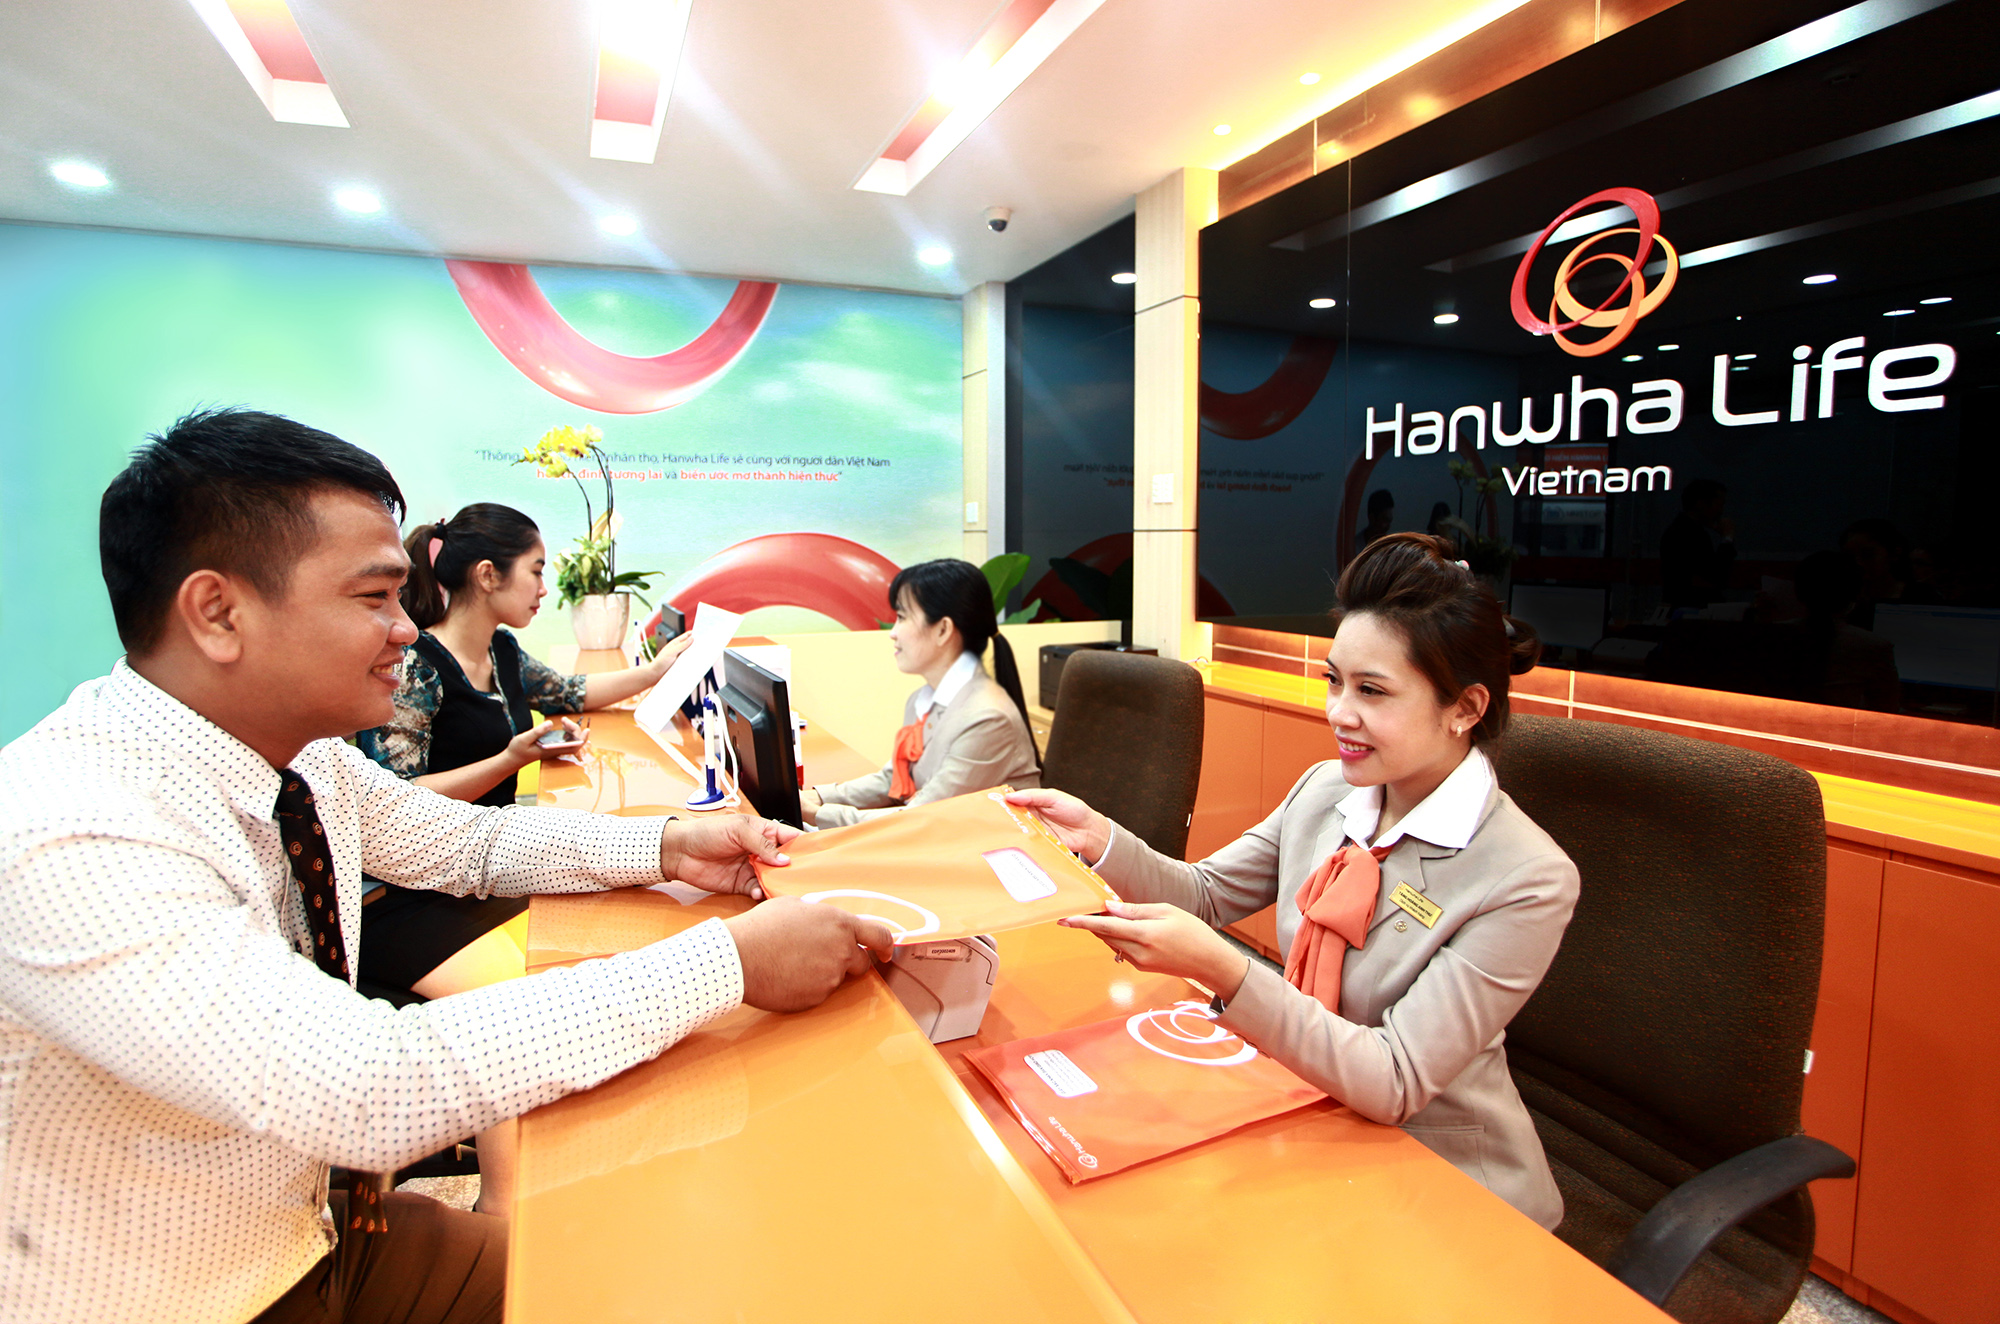 Hanwha Life Vietnam opens 100th customer service center